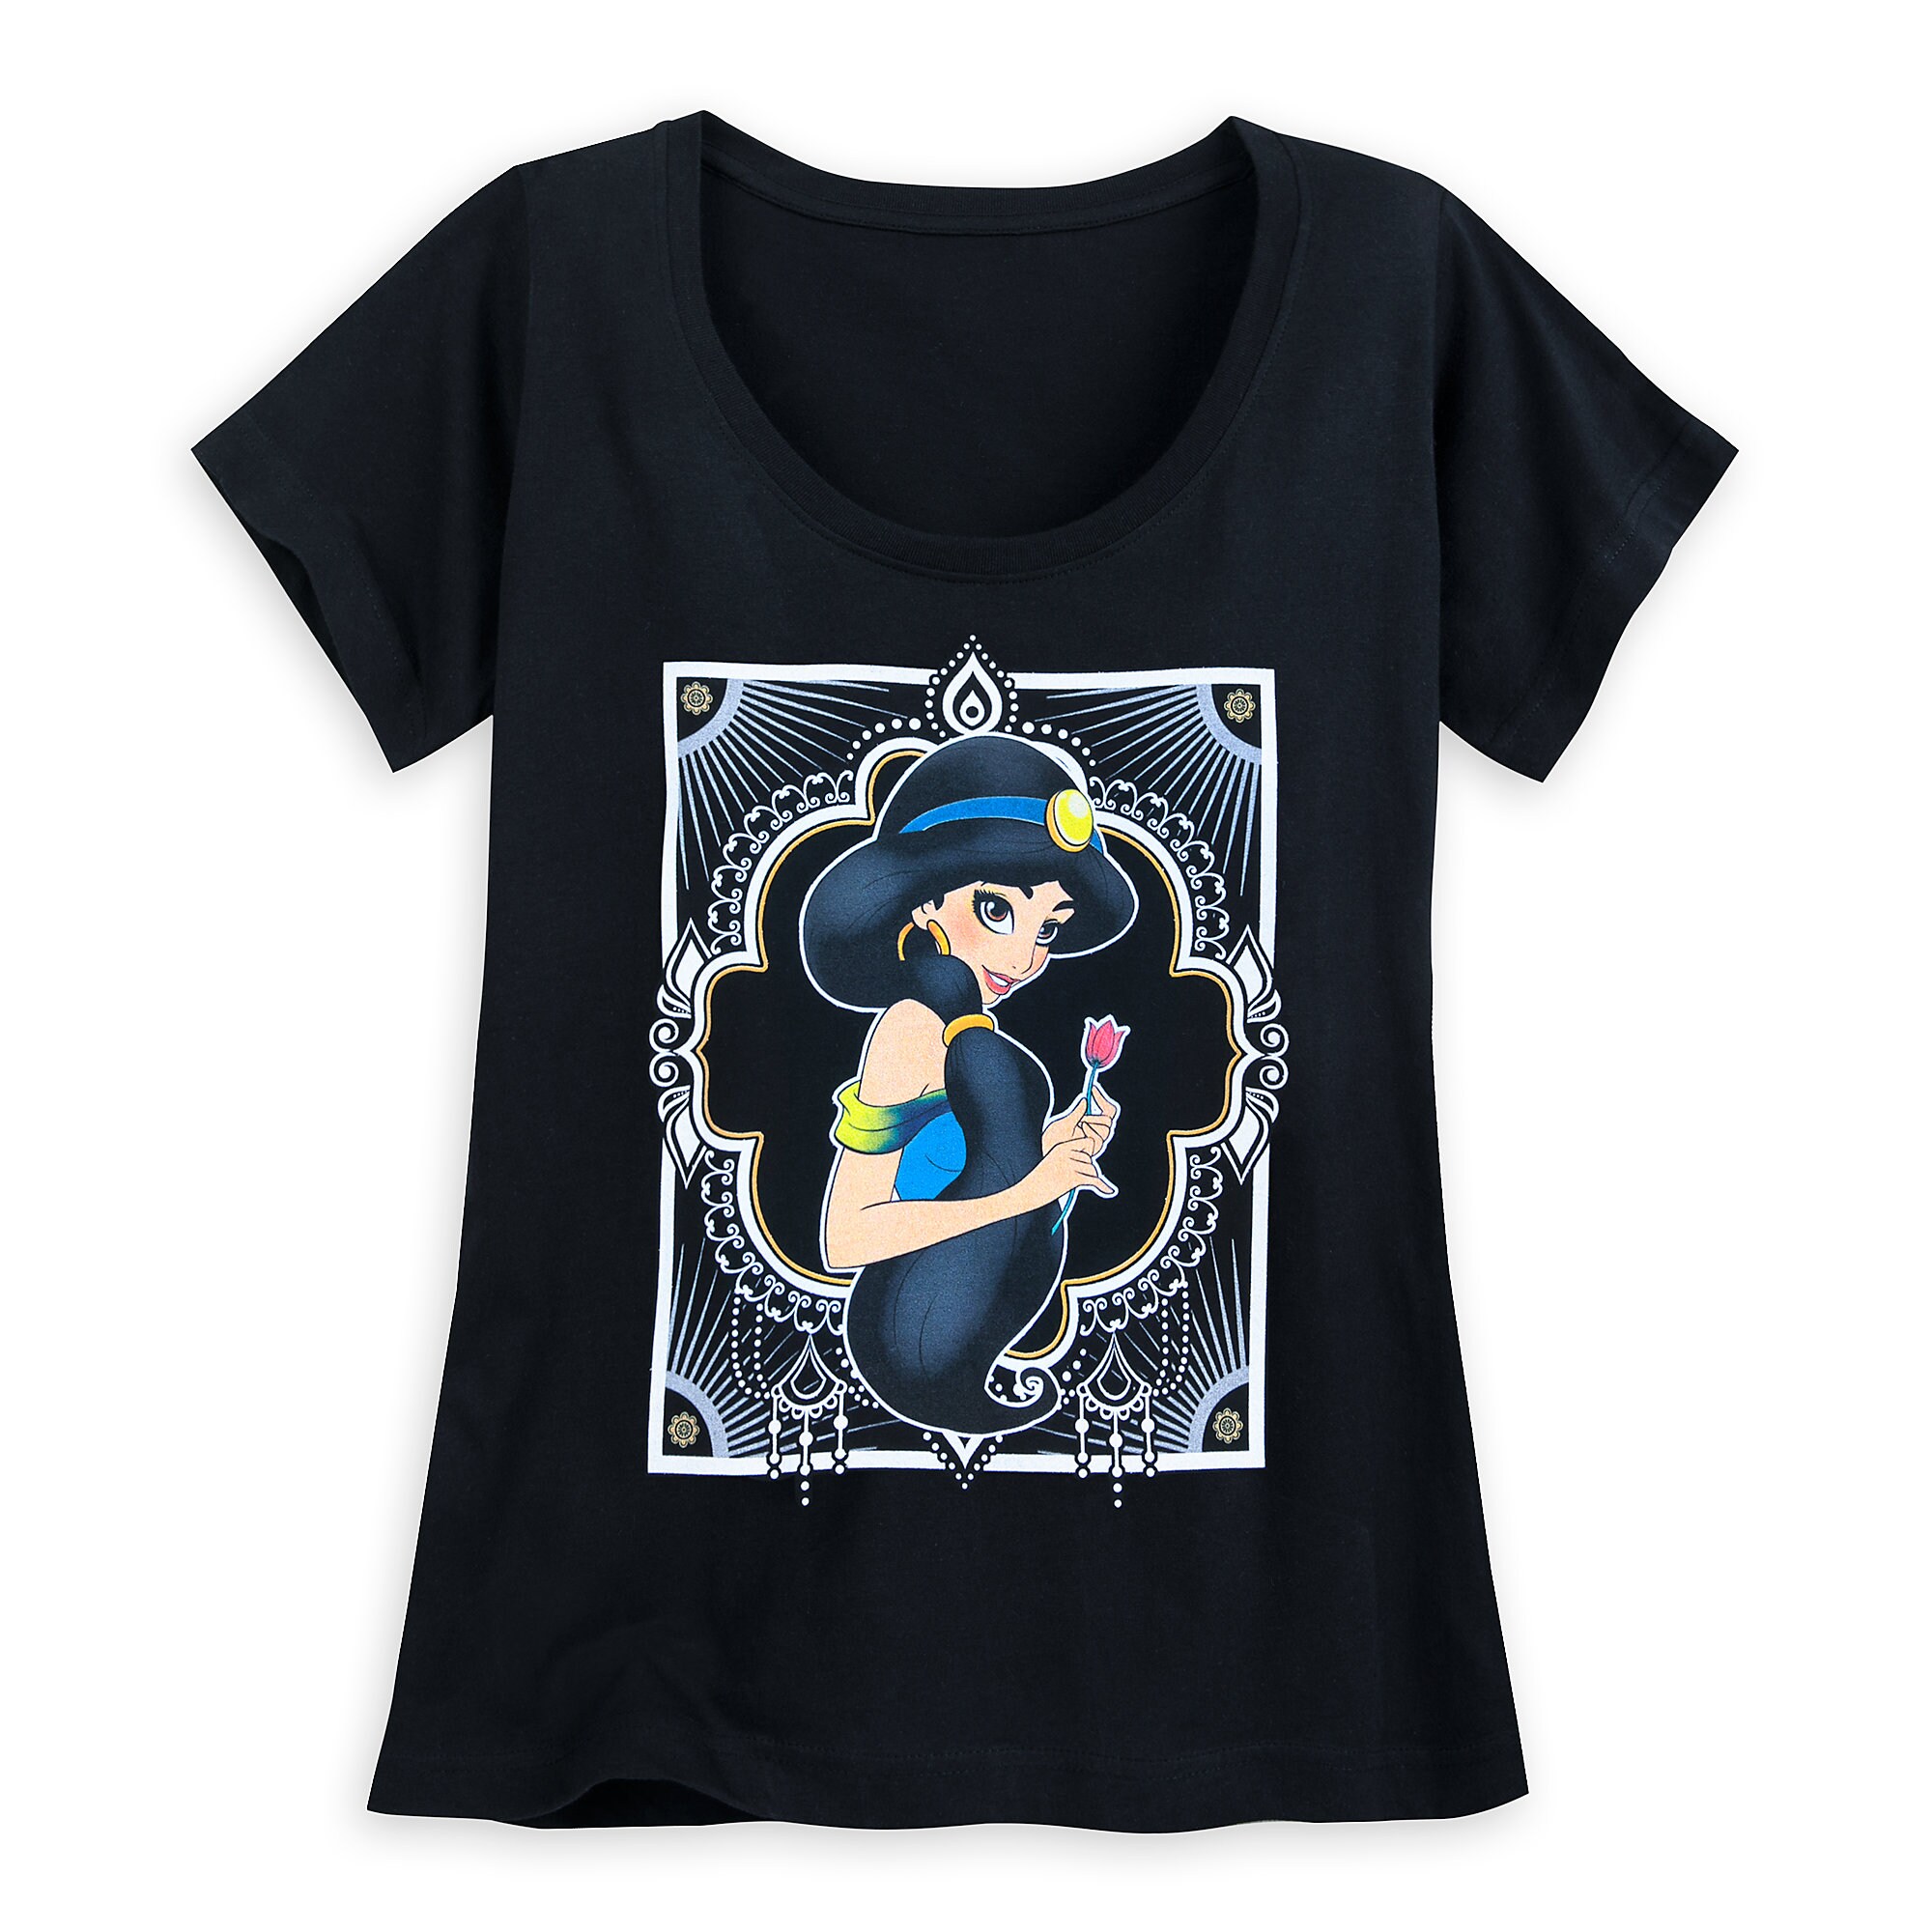 Jasmine Portrait T-Shirt for Women - Aladdin